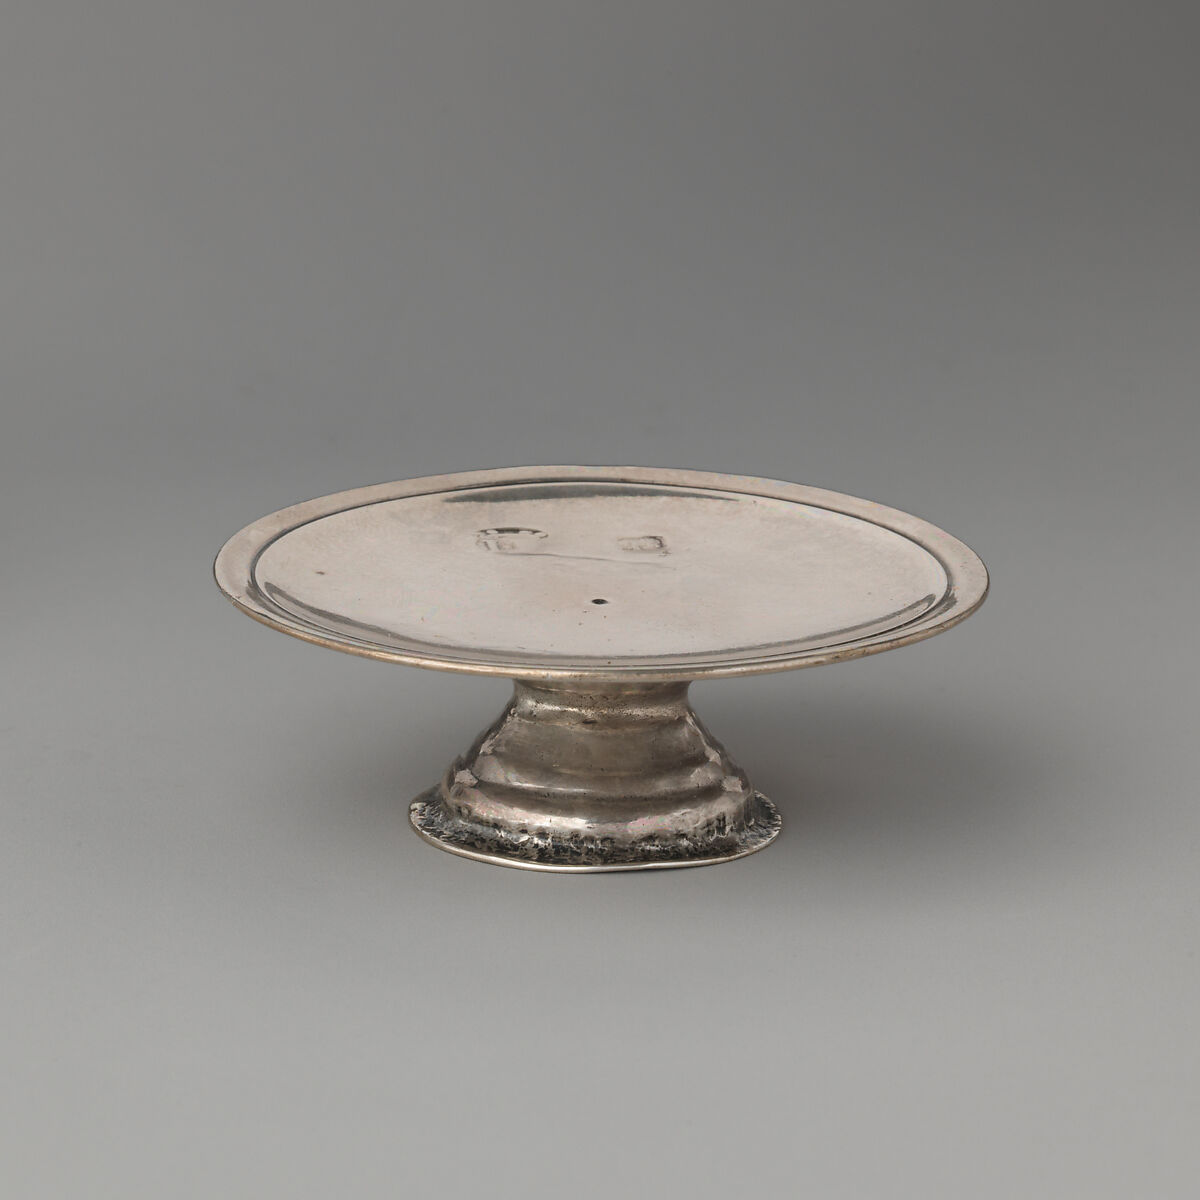 Miniature salver, I D (British, mid-late 17th century), Silver, British, London 